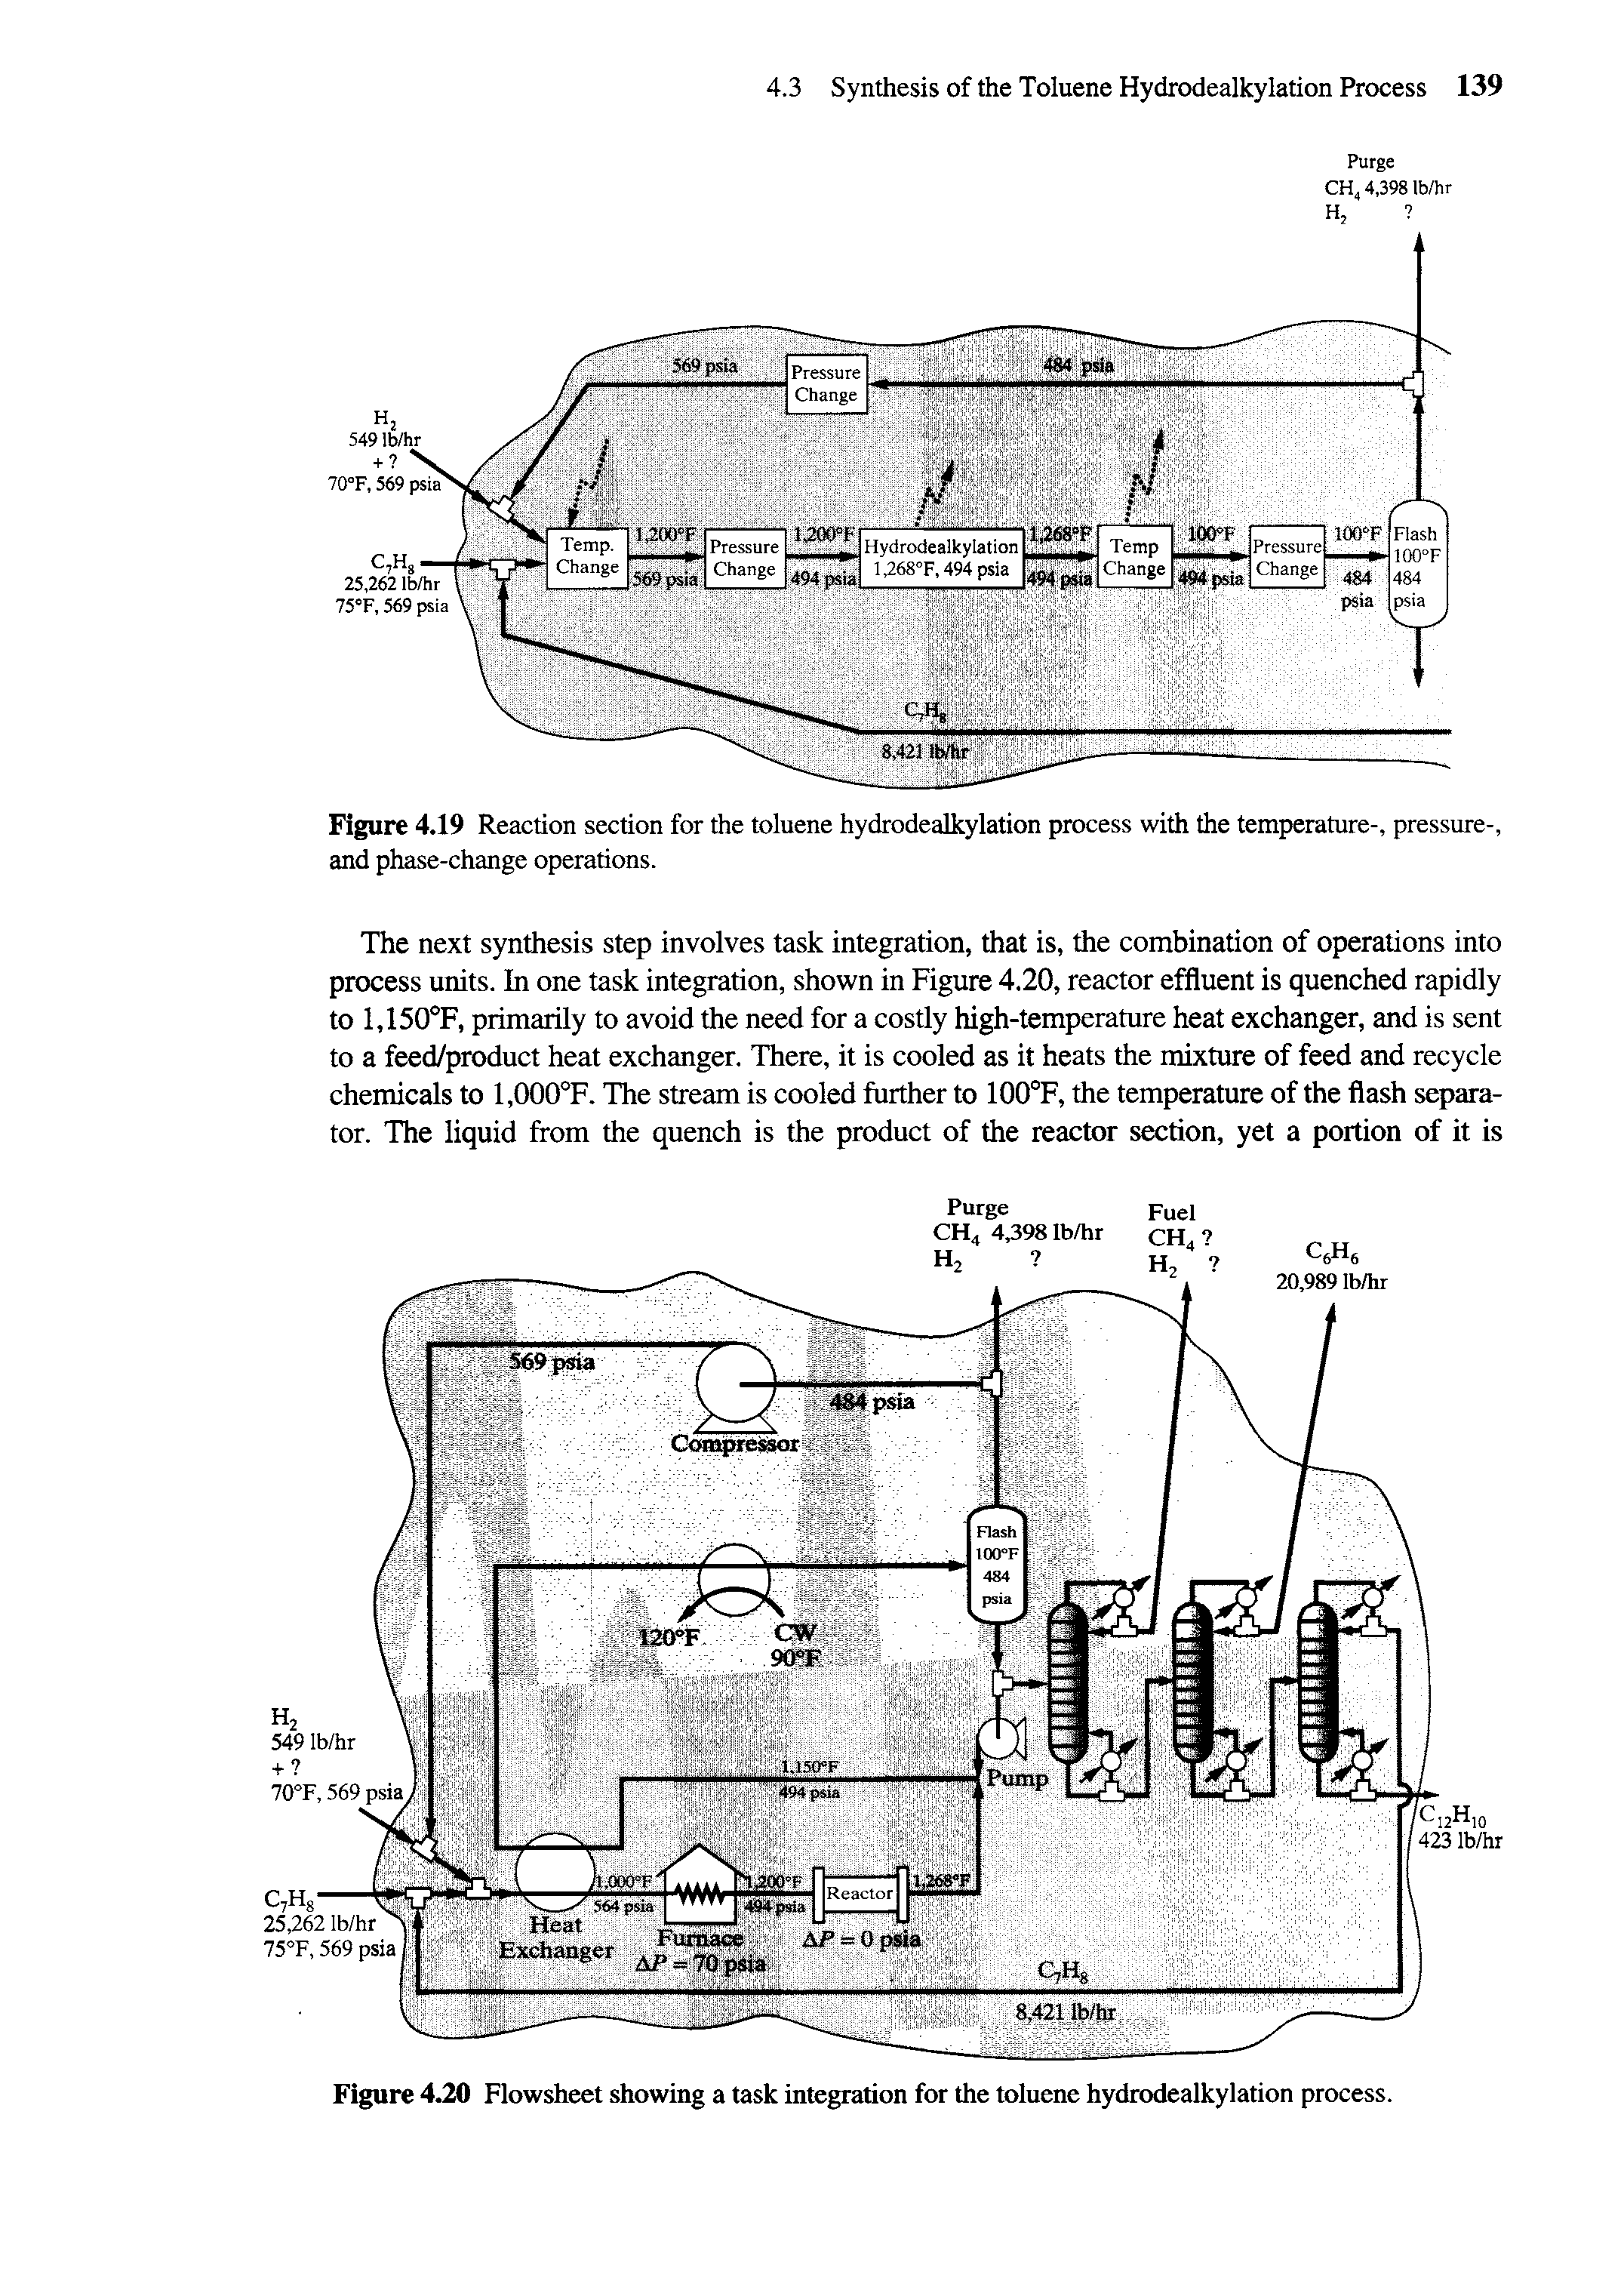 Figure 4.20 Flowsheet showing a task integration for the toluene hydrodealkylation process.